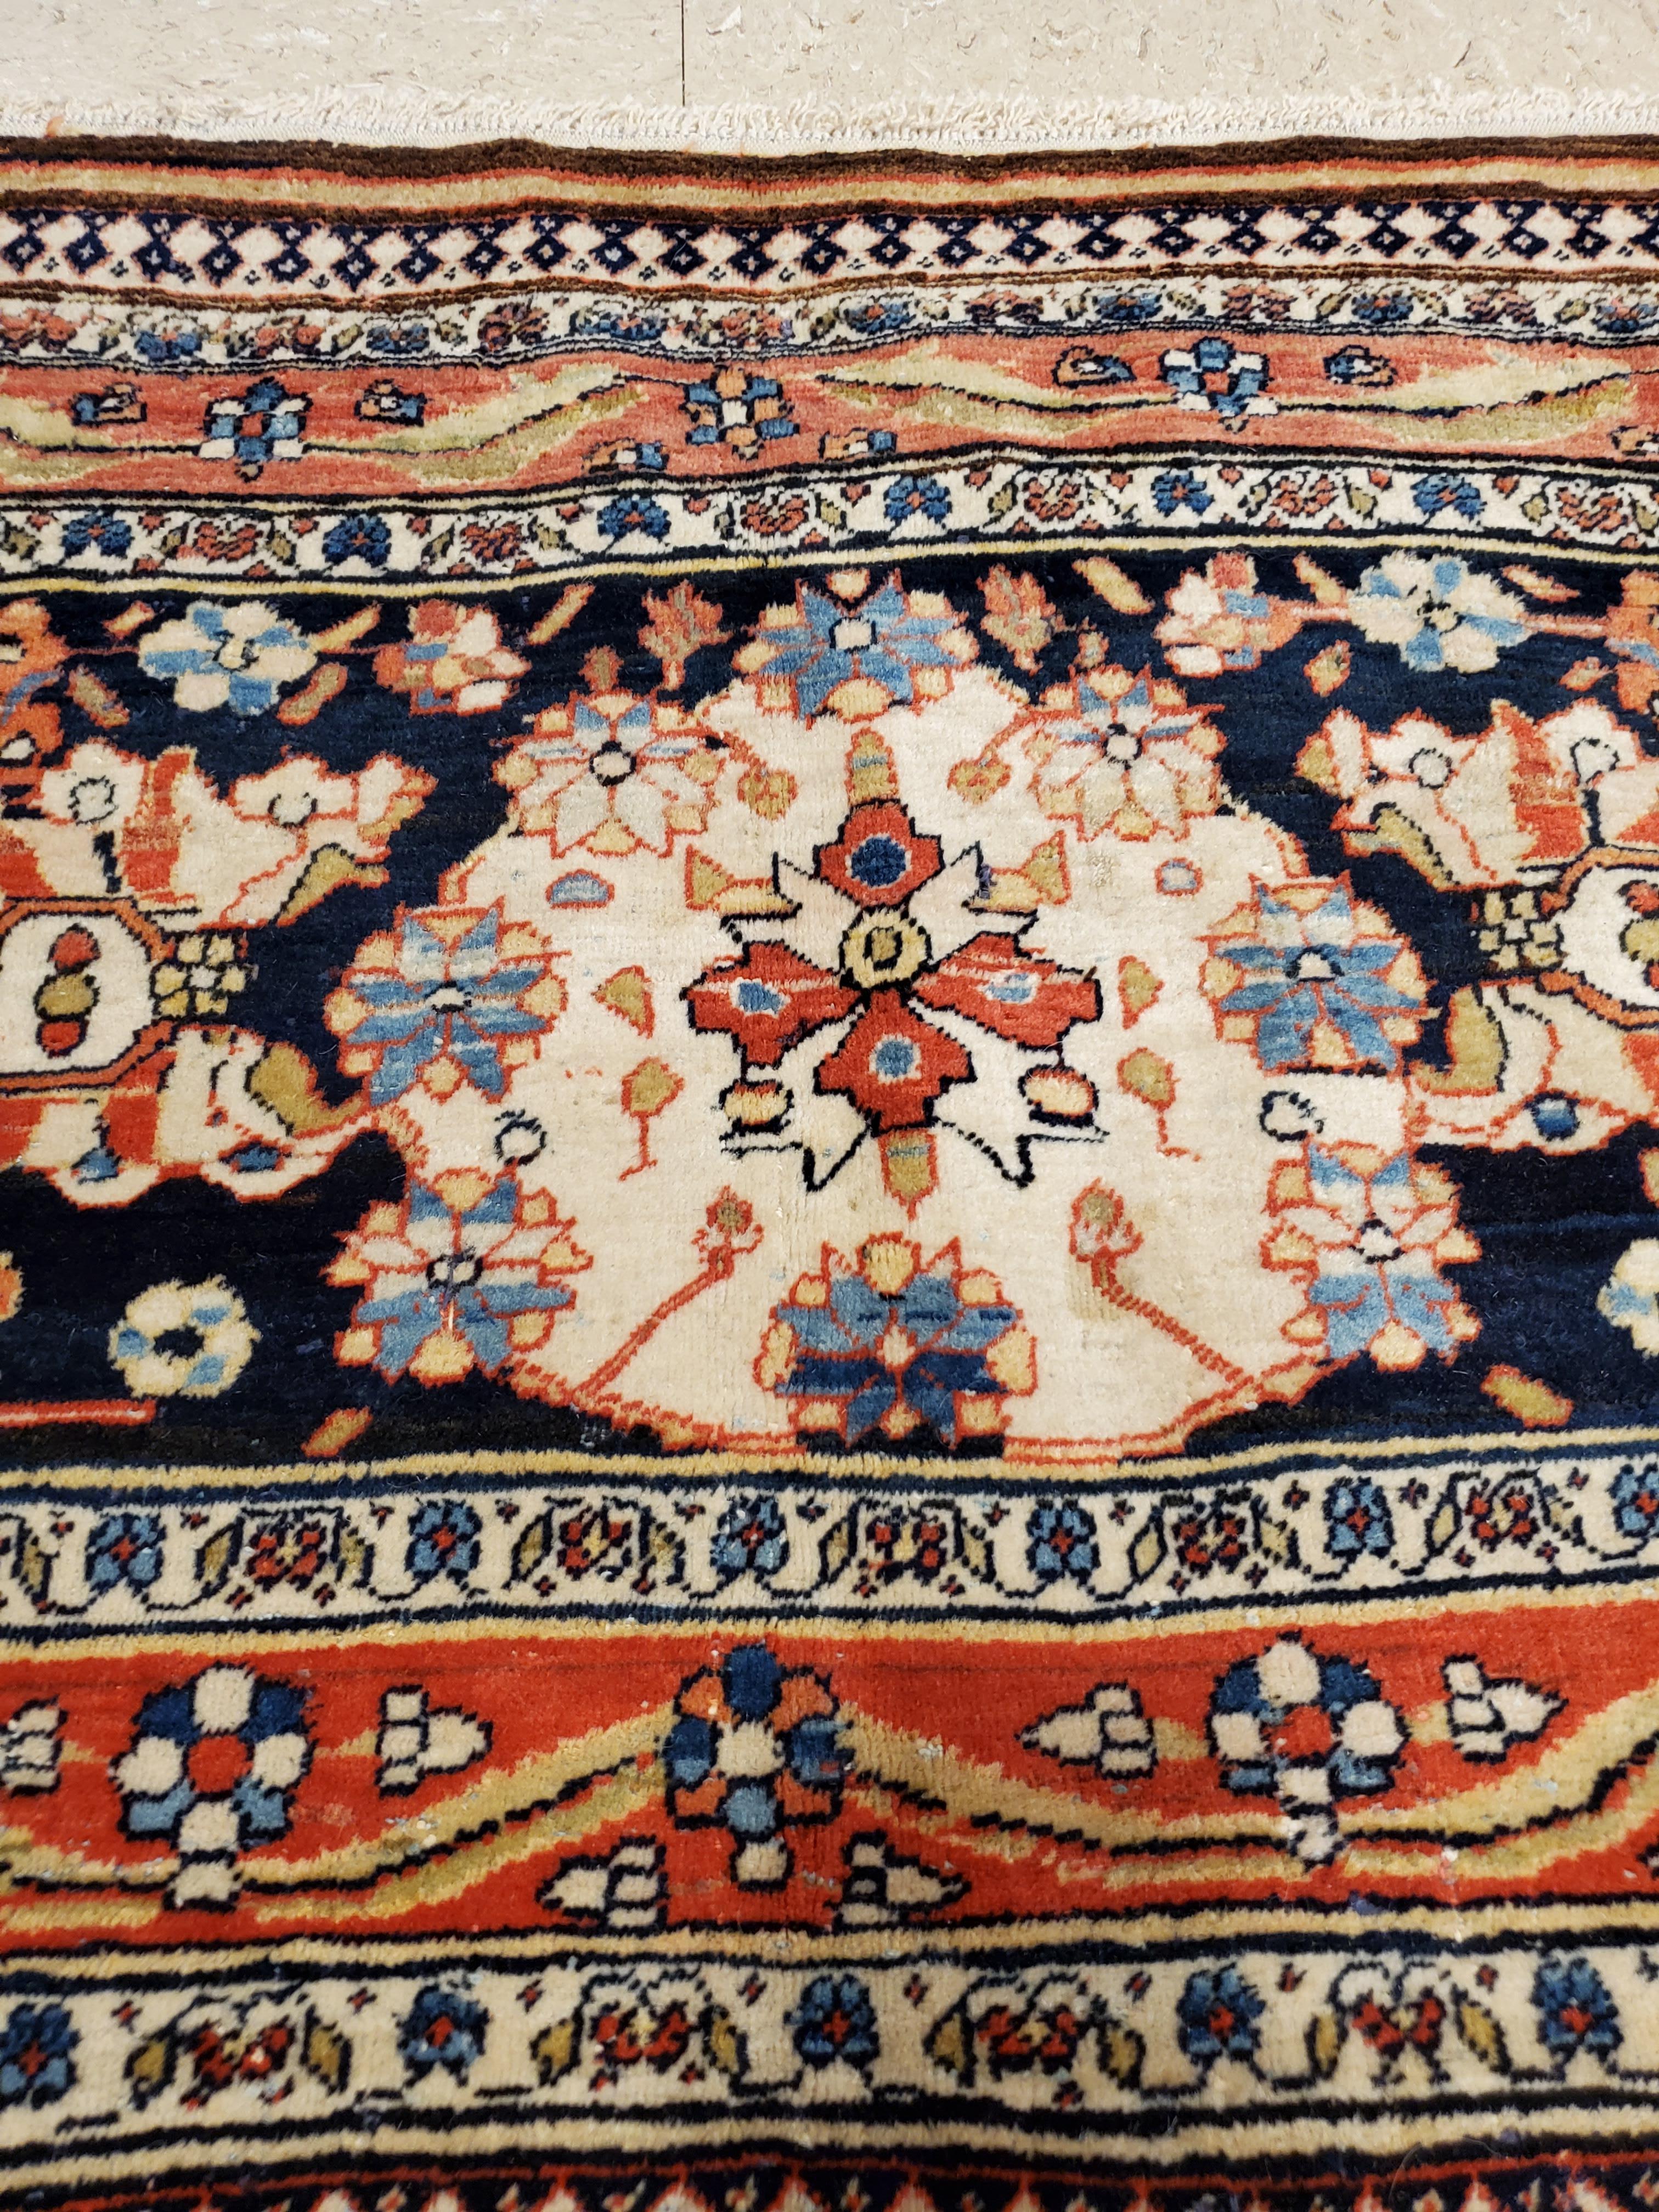 Antique Persian Mohtasham Kashan Carpet, Traditional, Ivory, Blue, Green, Reds 1